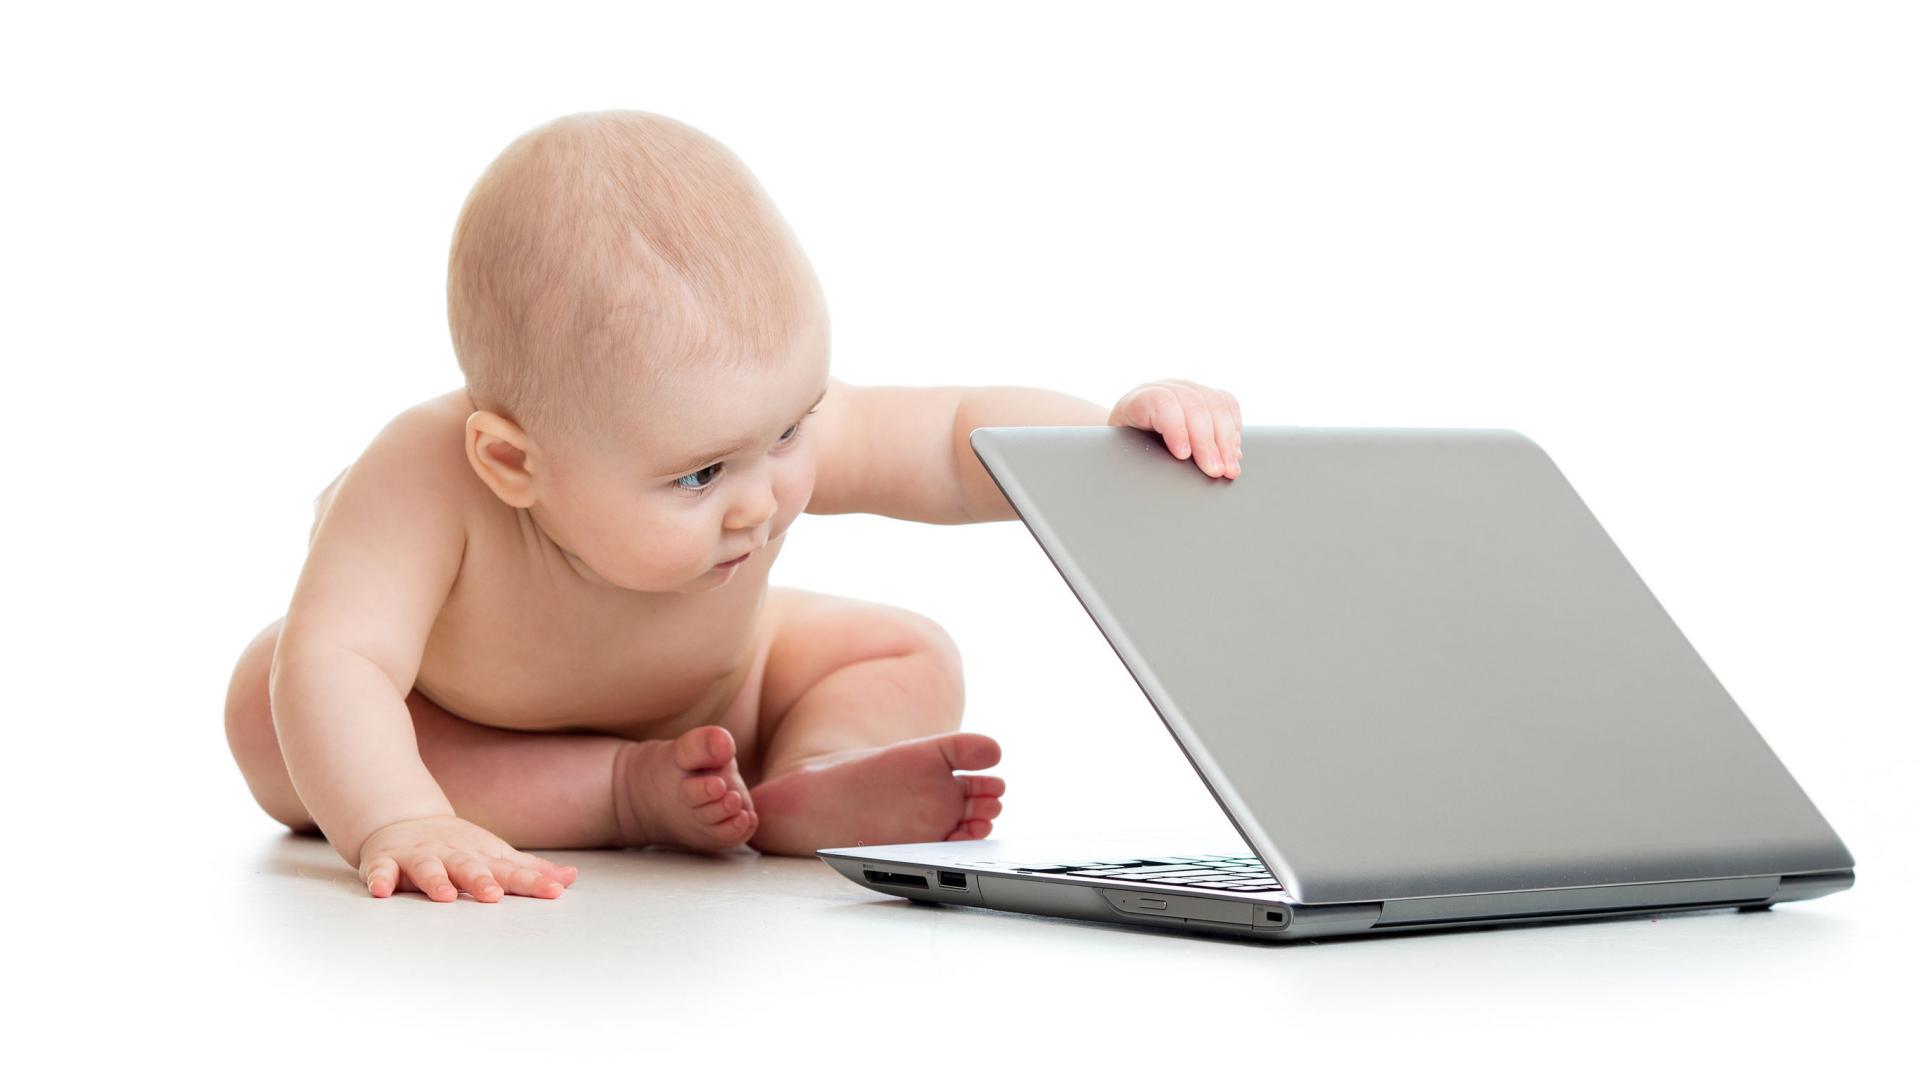 Baby + Laptop